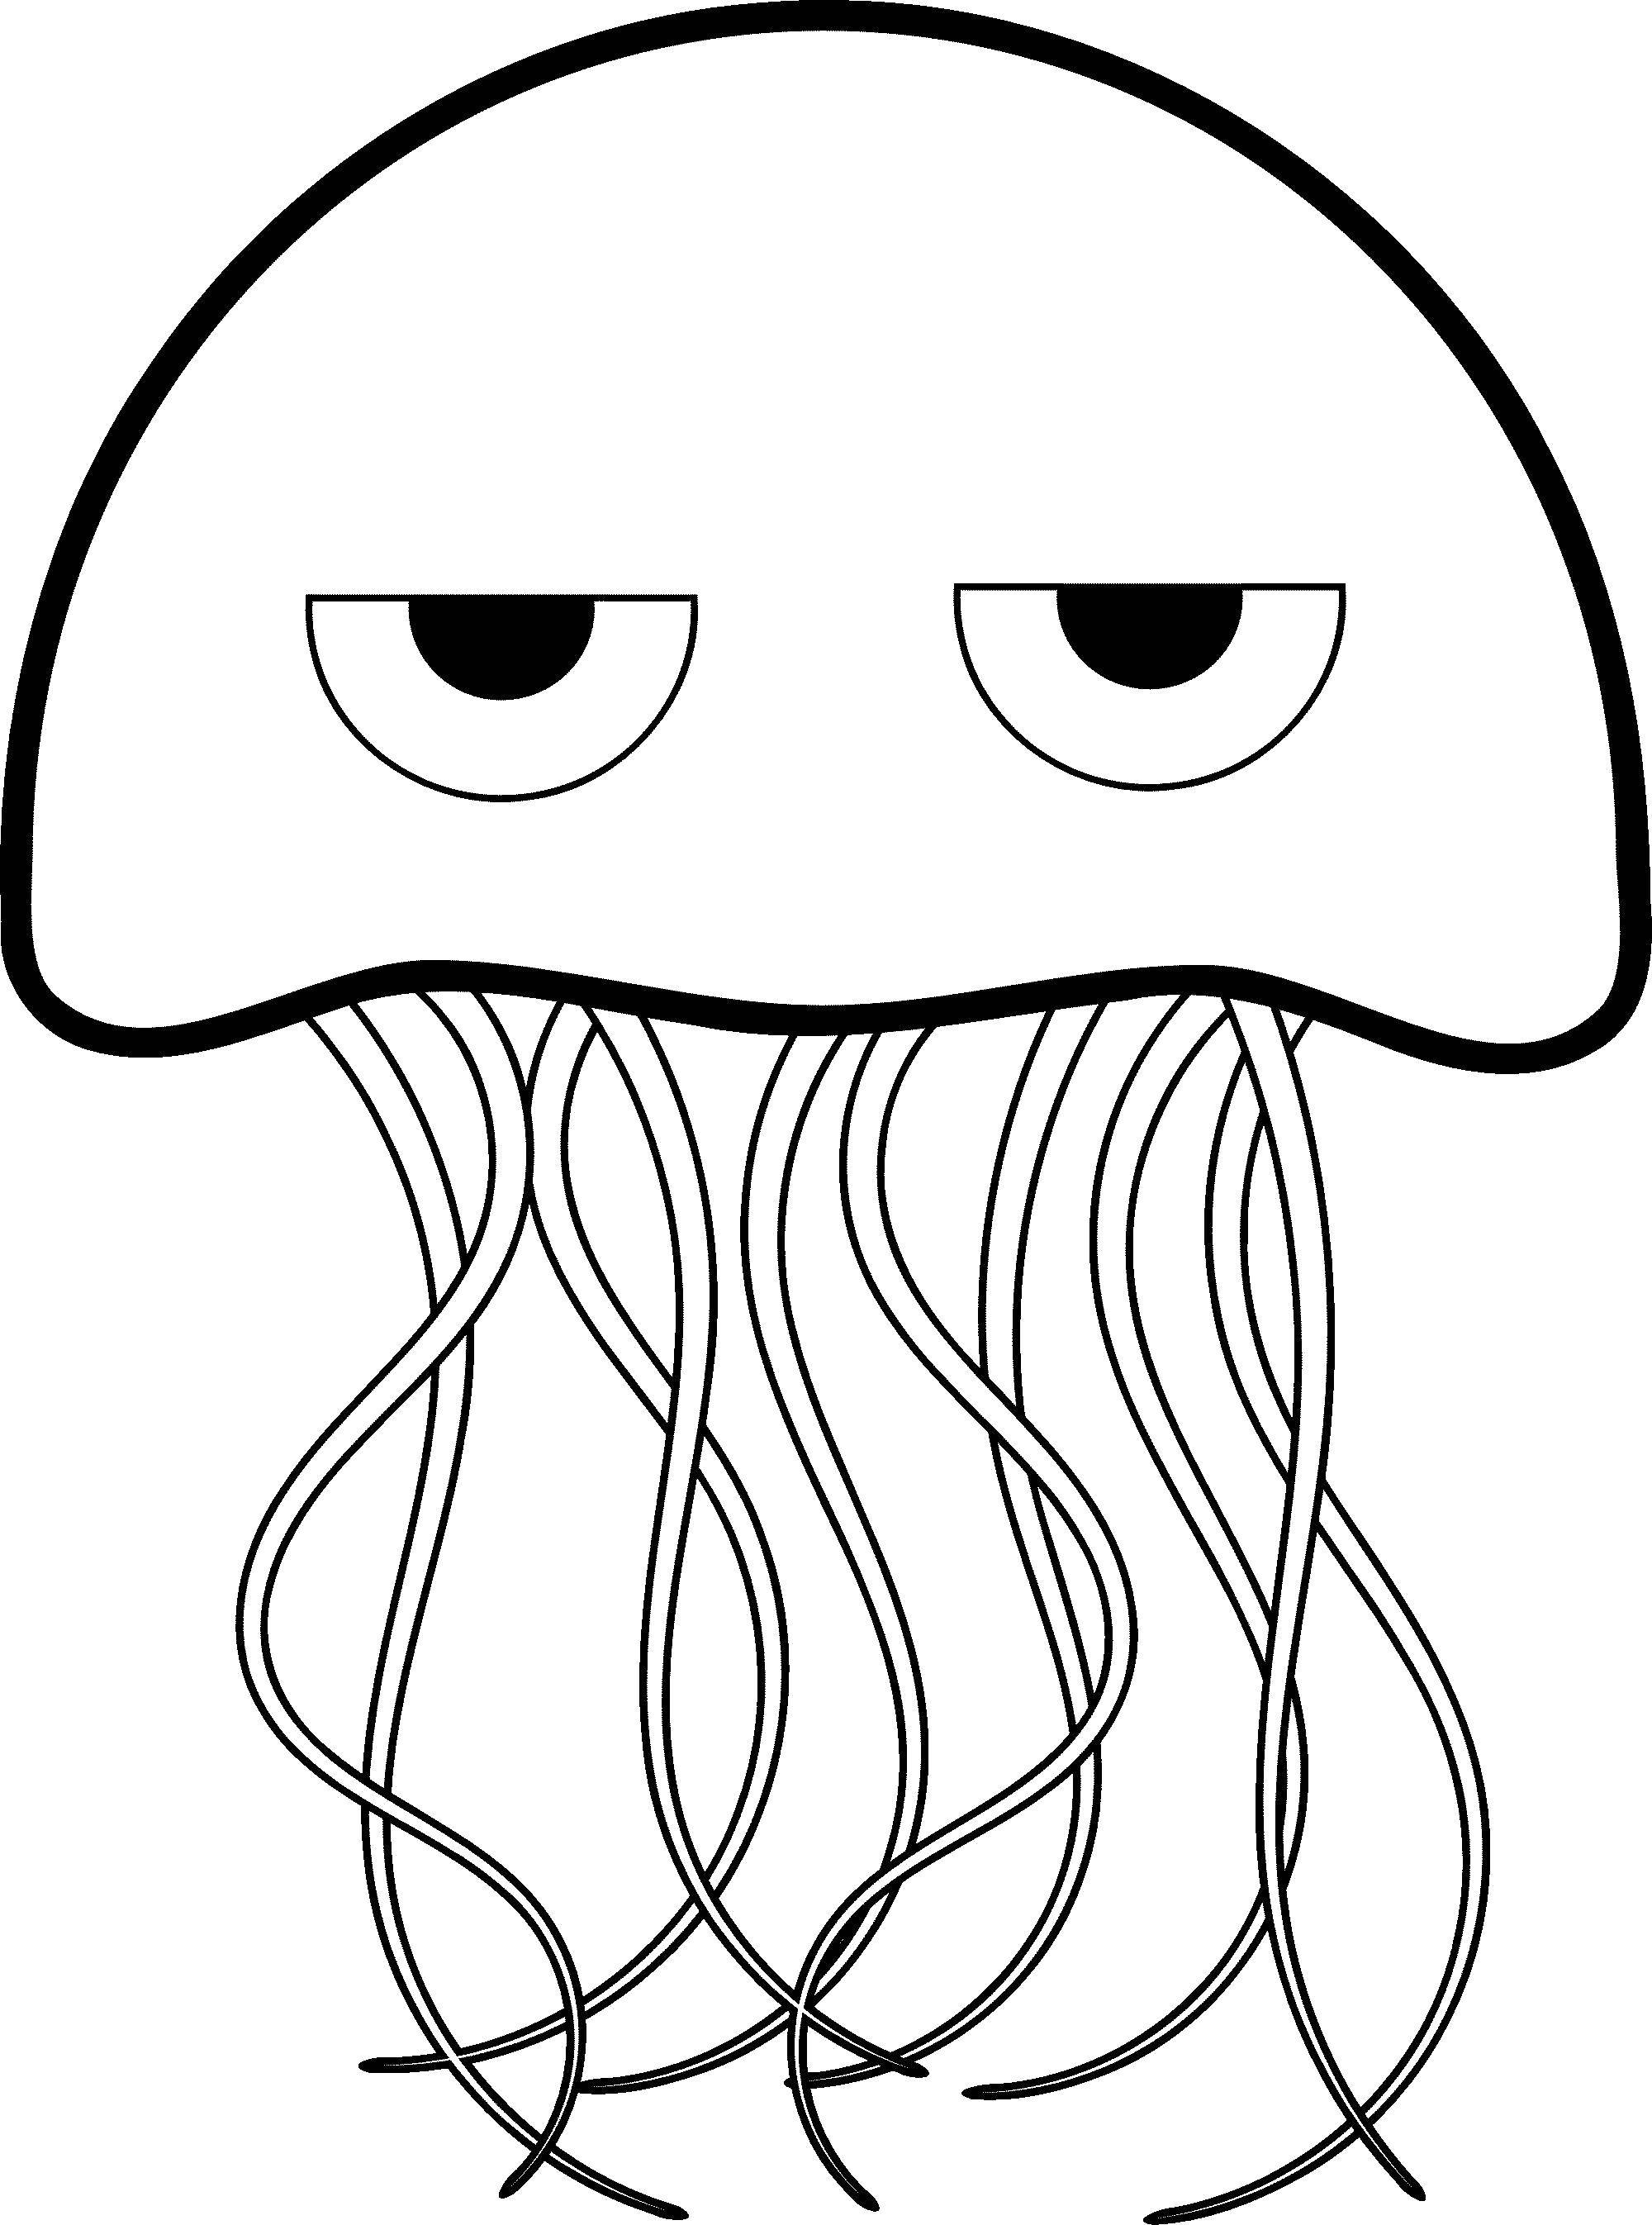 Coloring Disgruntled jellyfish. Category marine. Tags:  Underwater world, jellyfish, fish.